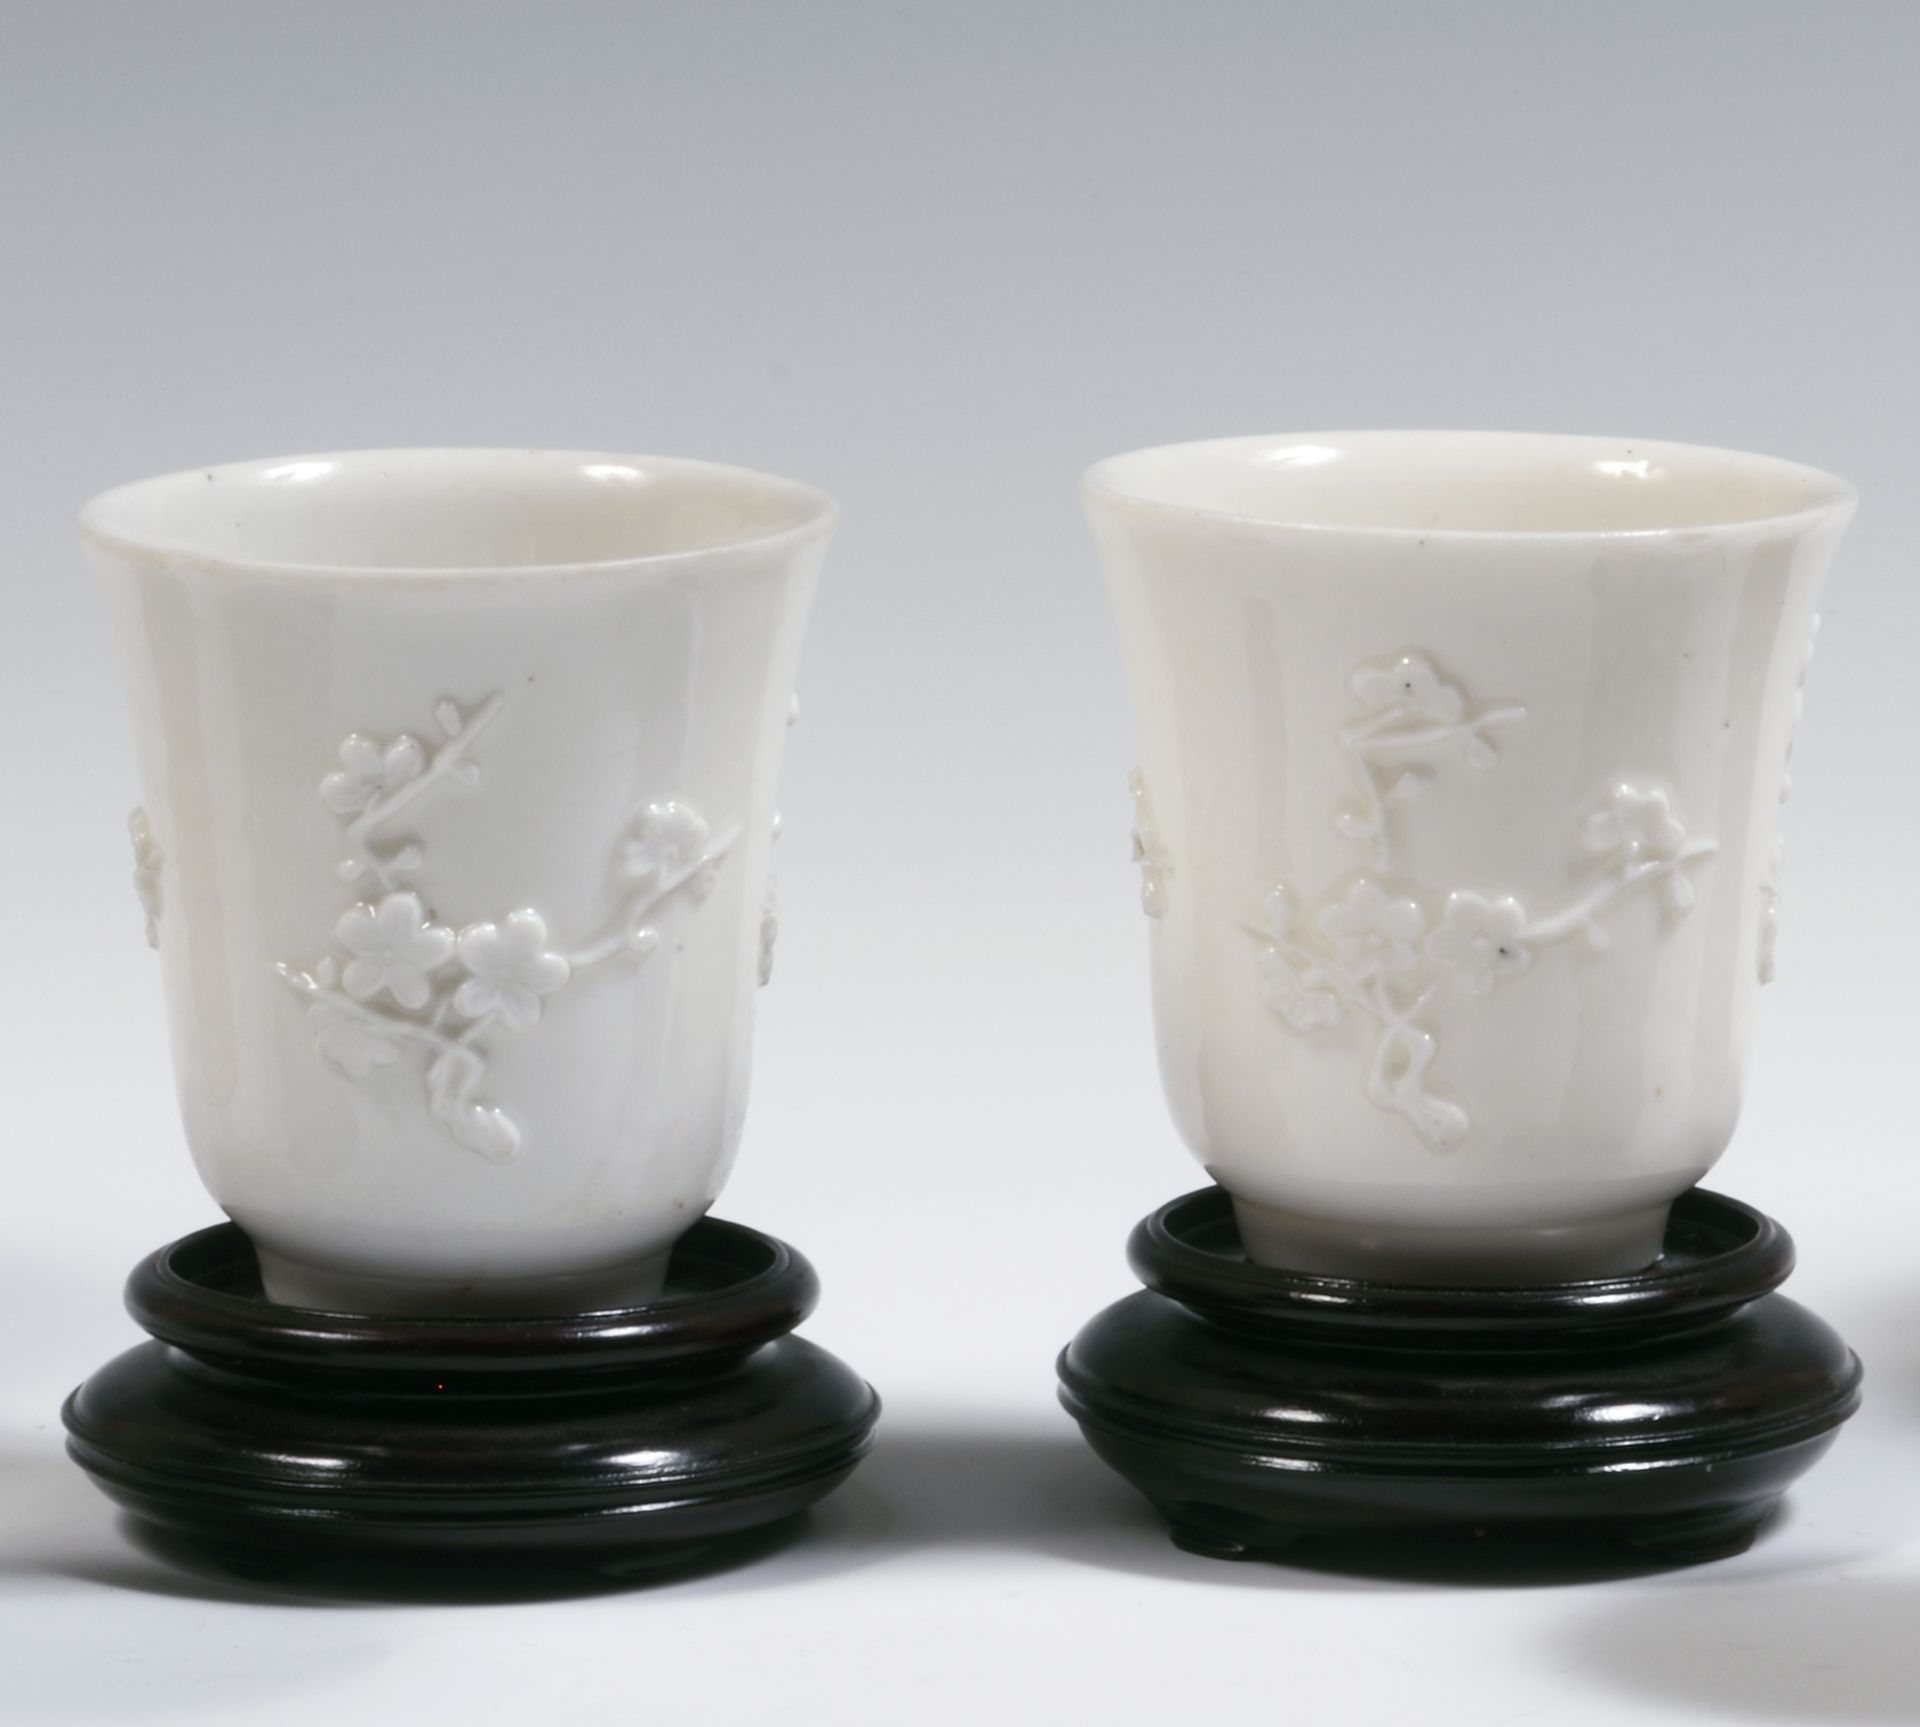 Null 
中国

两只中国白瓷杯，浮雕装饰有梅花树枝。

康熙时期（1662-1722）。

H.8厘米。

每个杯子的边缘有一个小缺口。